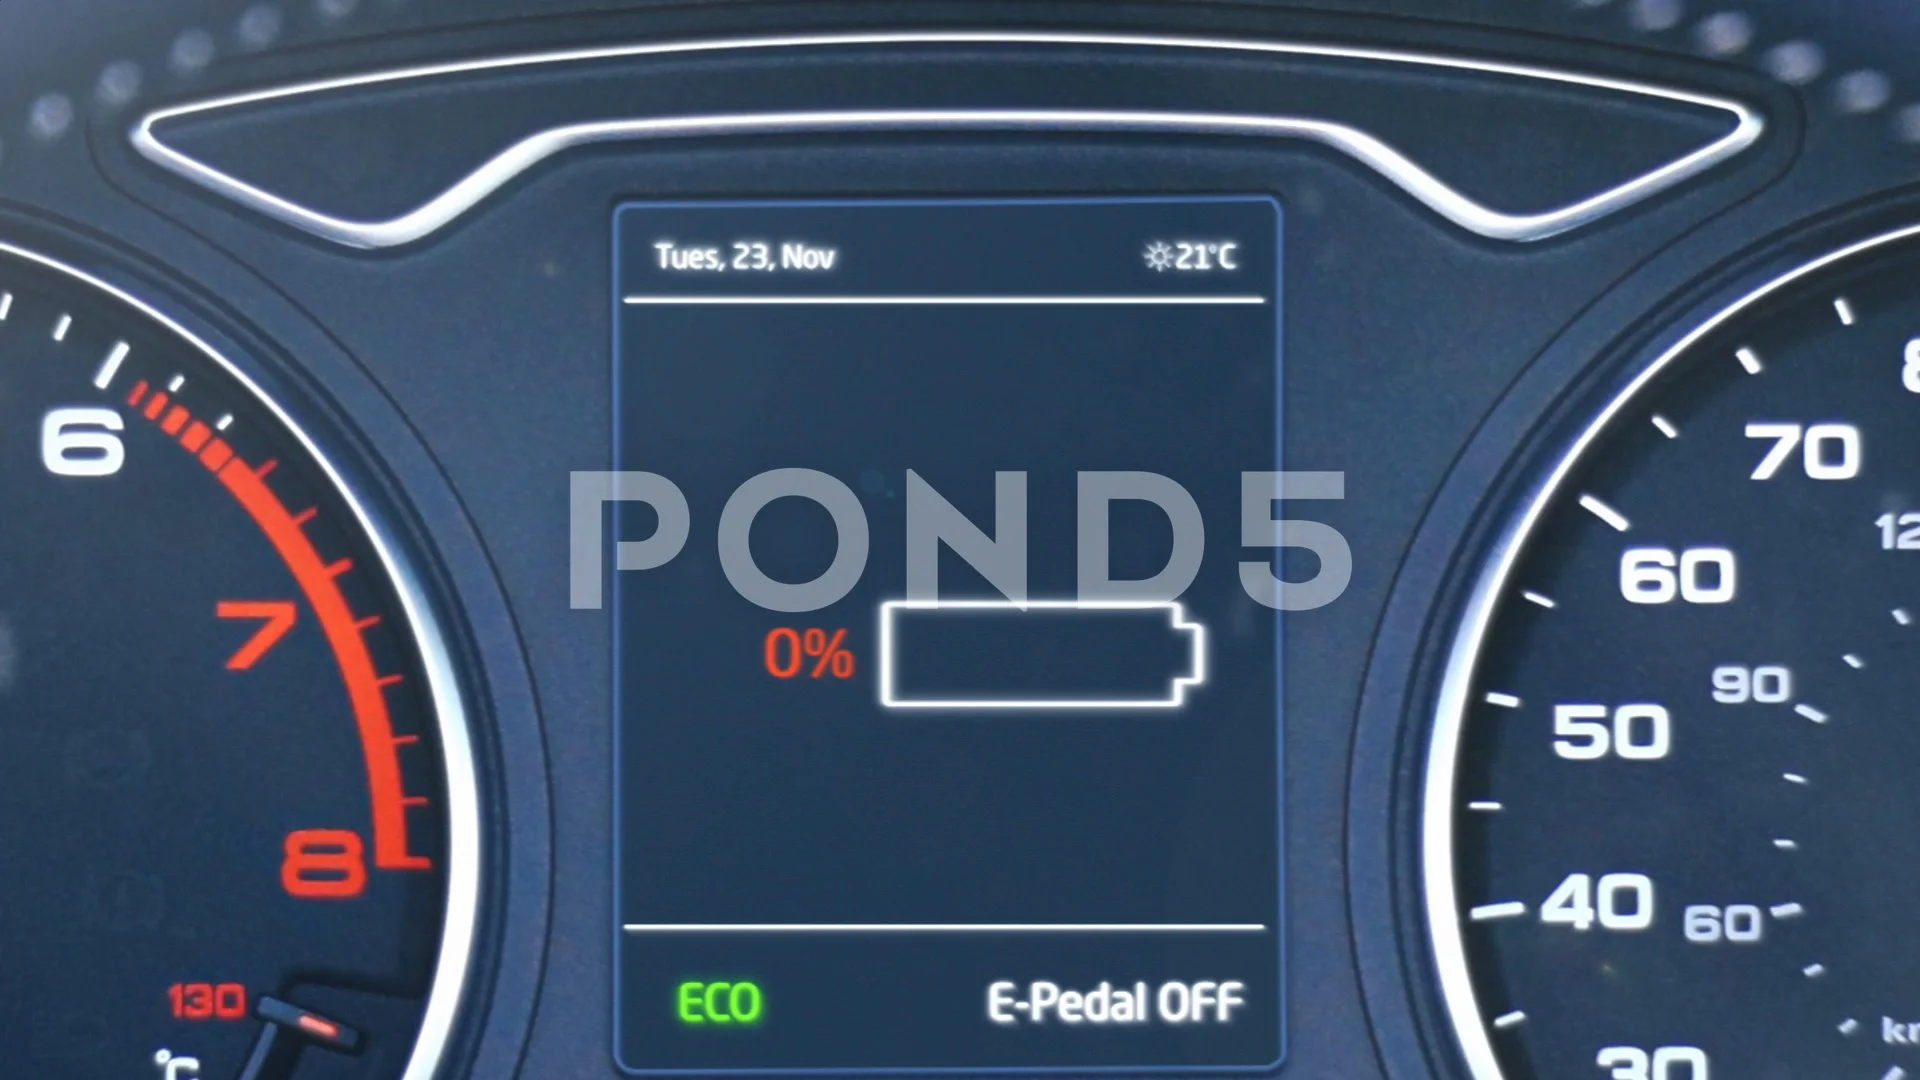 https://images.pond5.com/dashboard-electric-car-battery-charges-125251179_prevstill.jpeg